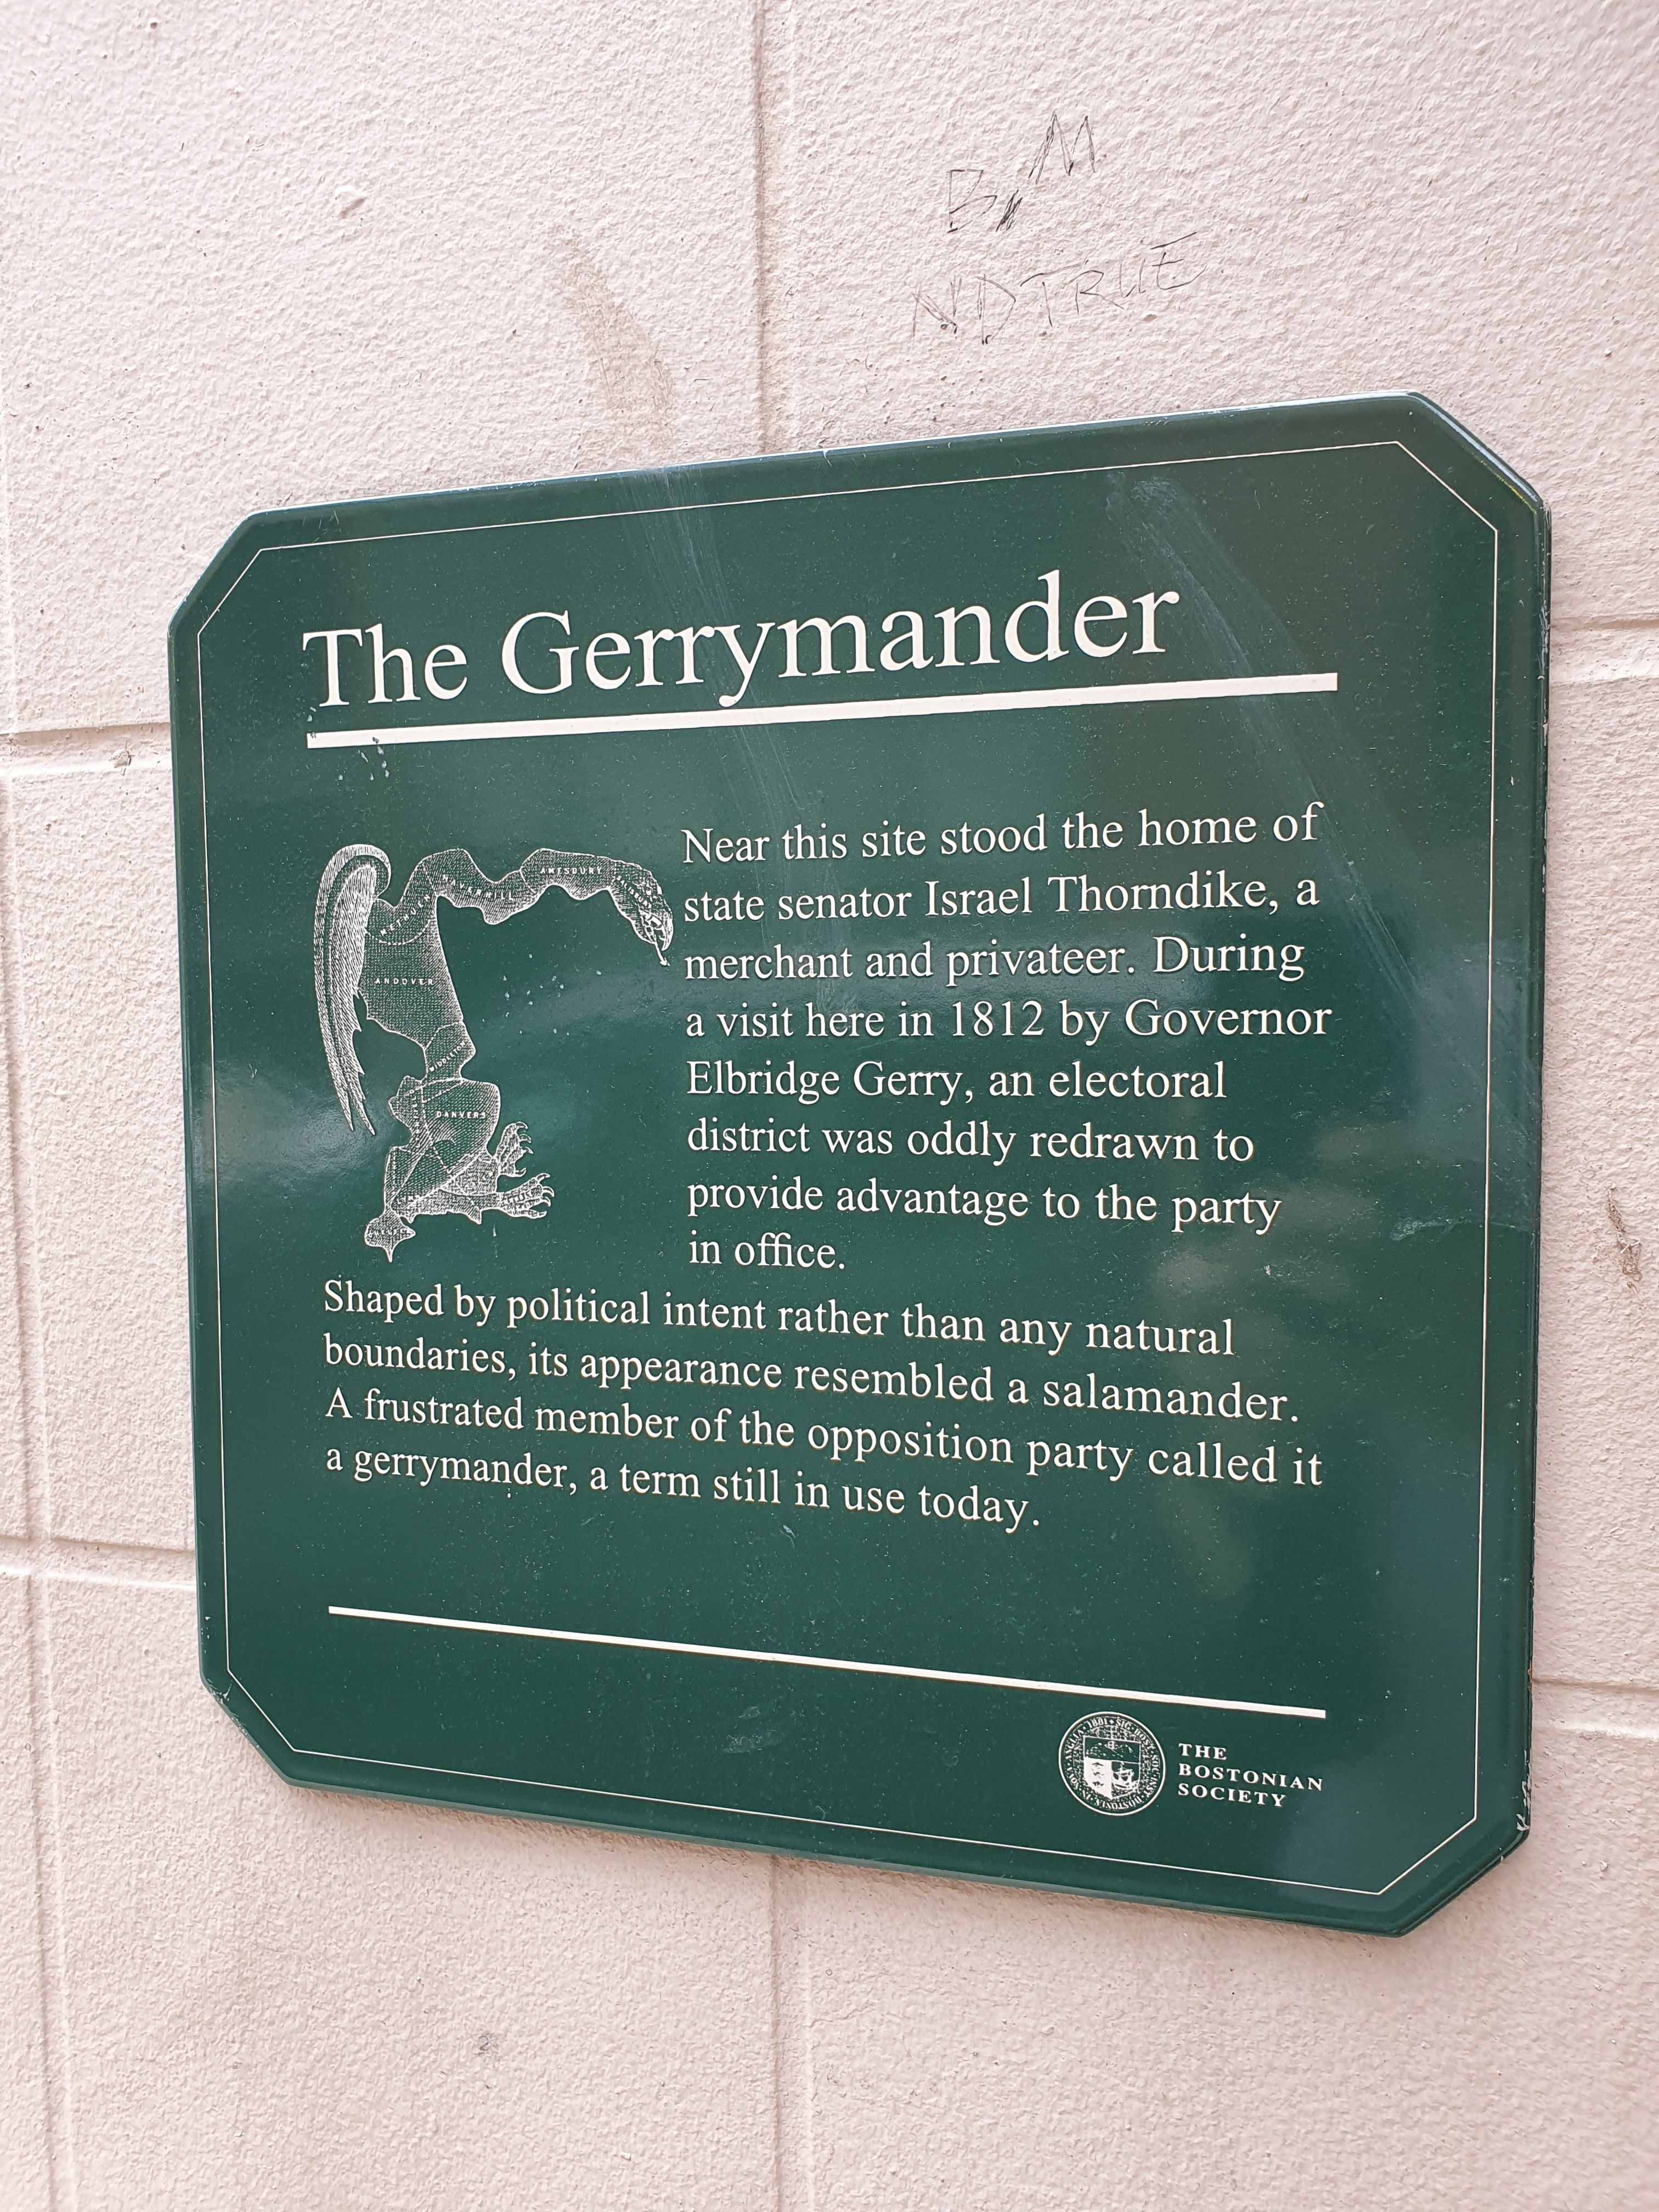 The Gerrymander Marker